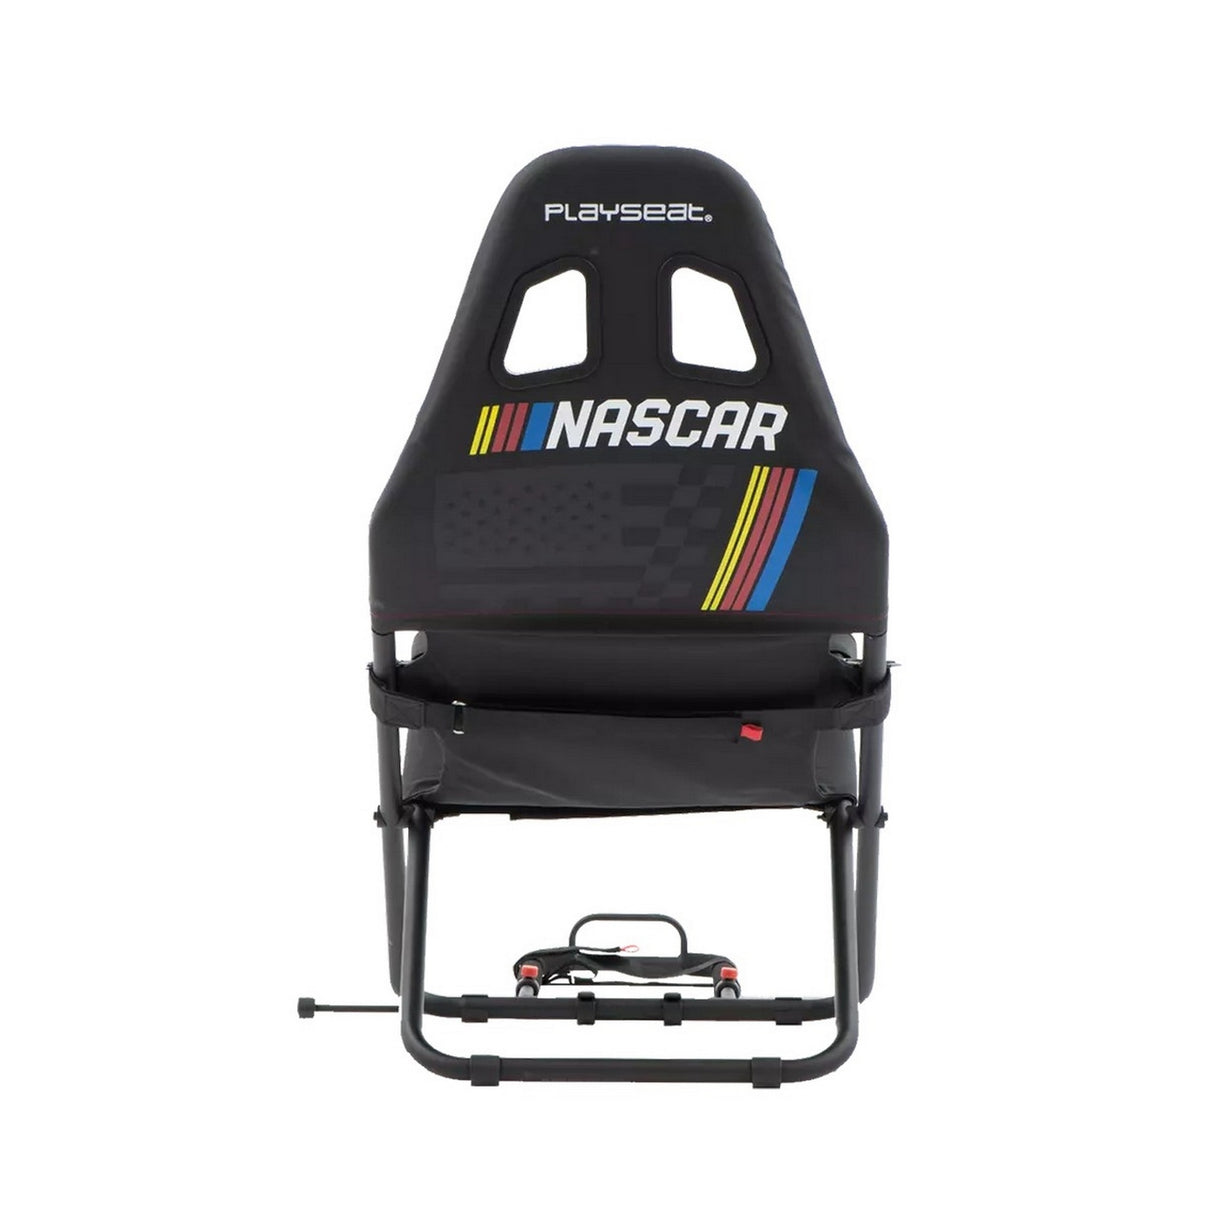 Playseat Challenge Gaming Racing Seat, NASCAR Edition